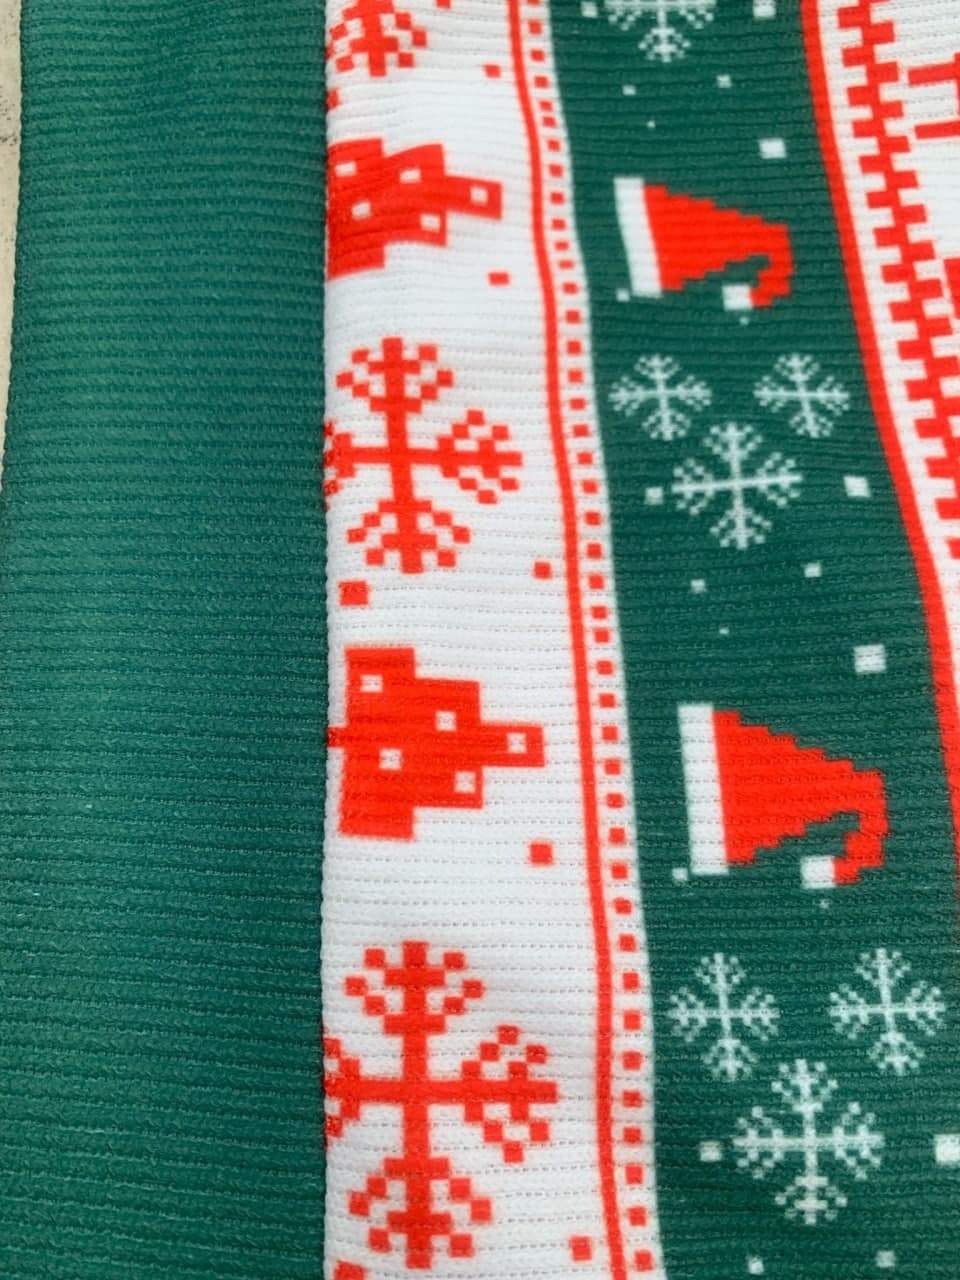 Inuyasha x Kagome Inuyasha Anime Ugly Christmas Sweater Xmas Gift